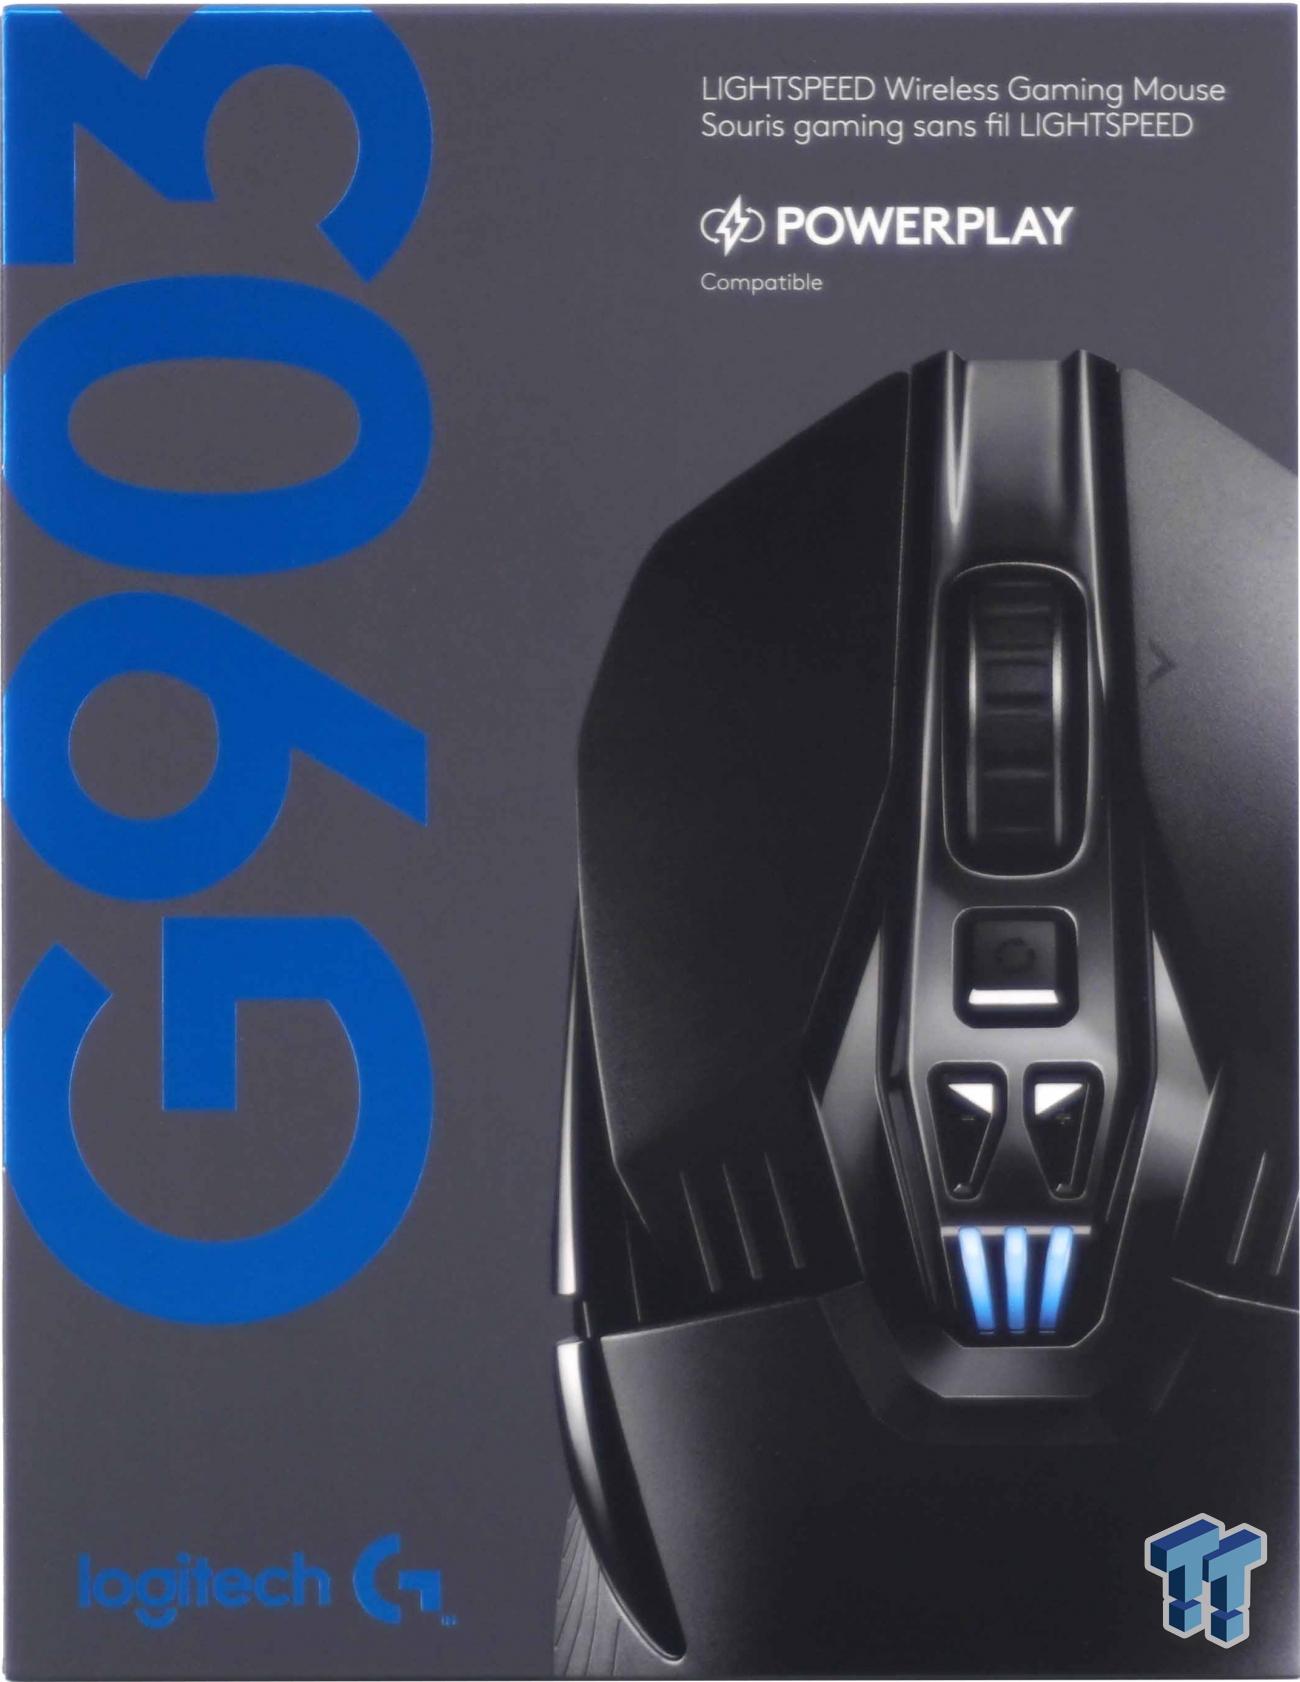 Logitech G903 Lightspeed Wireless Mouse and Powerplay Charging Mat Review